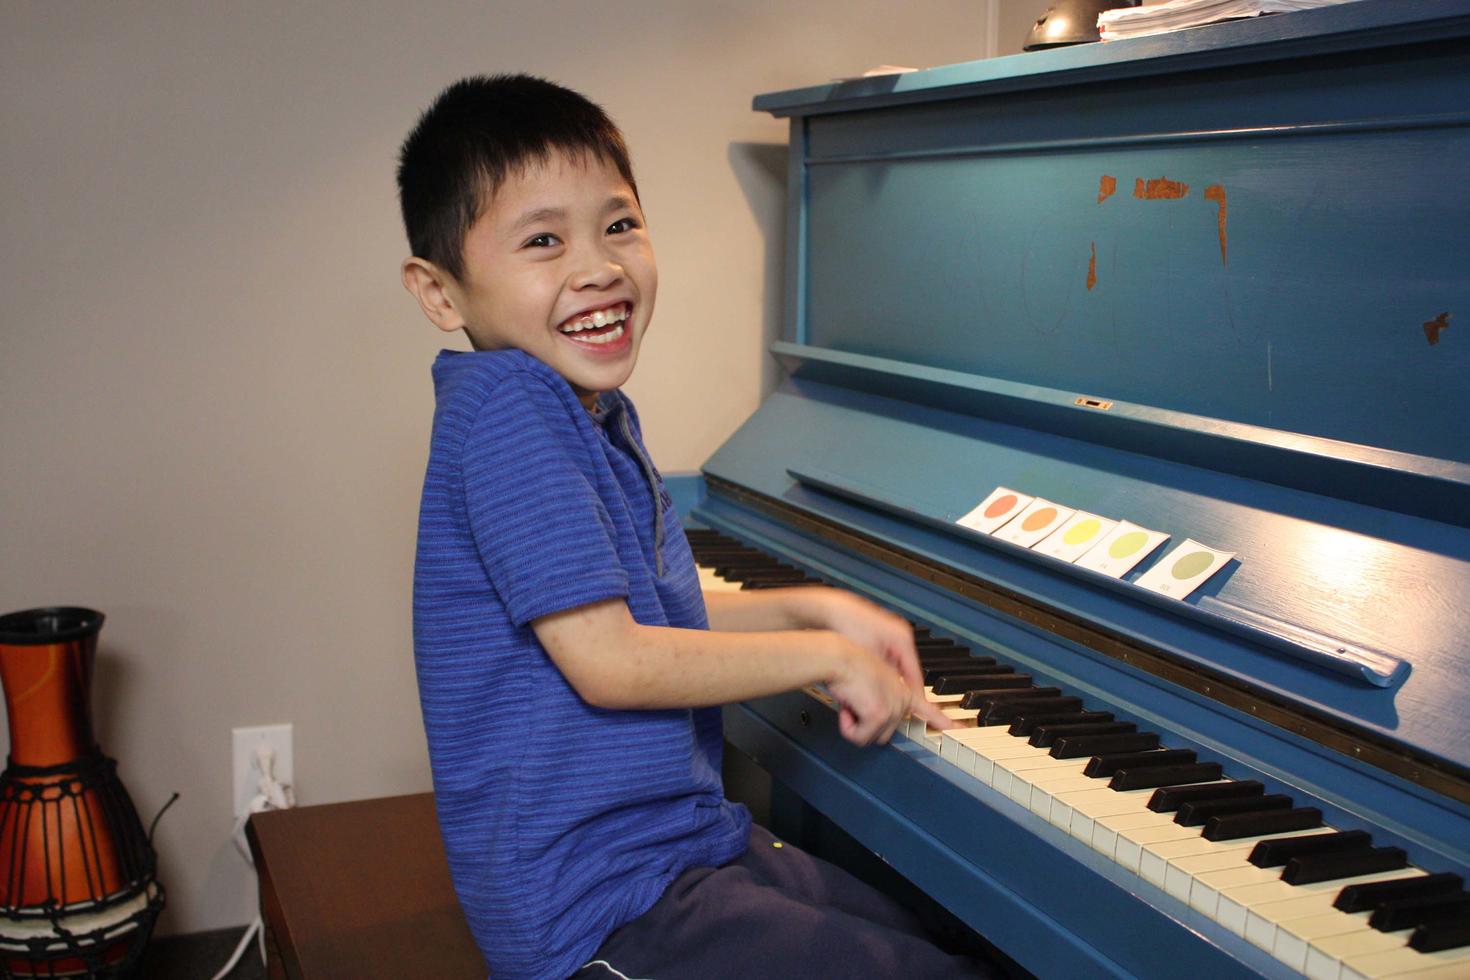 A young boy playing piano